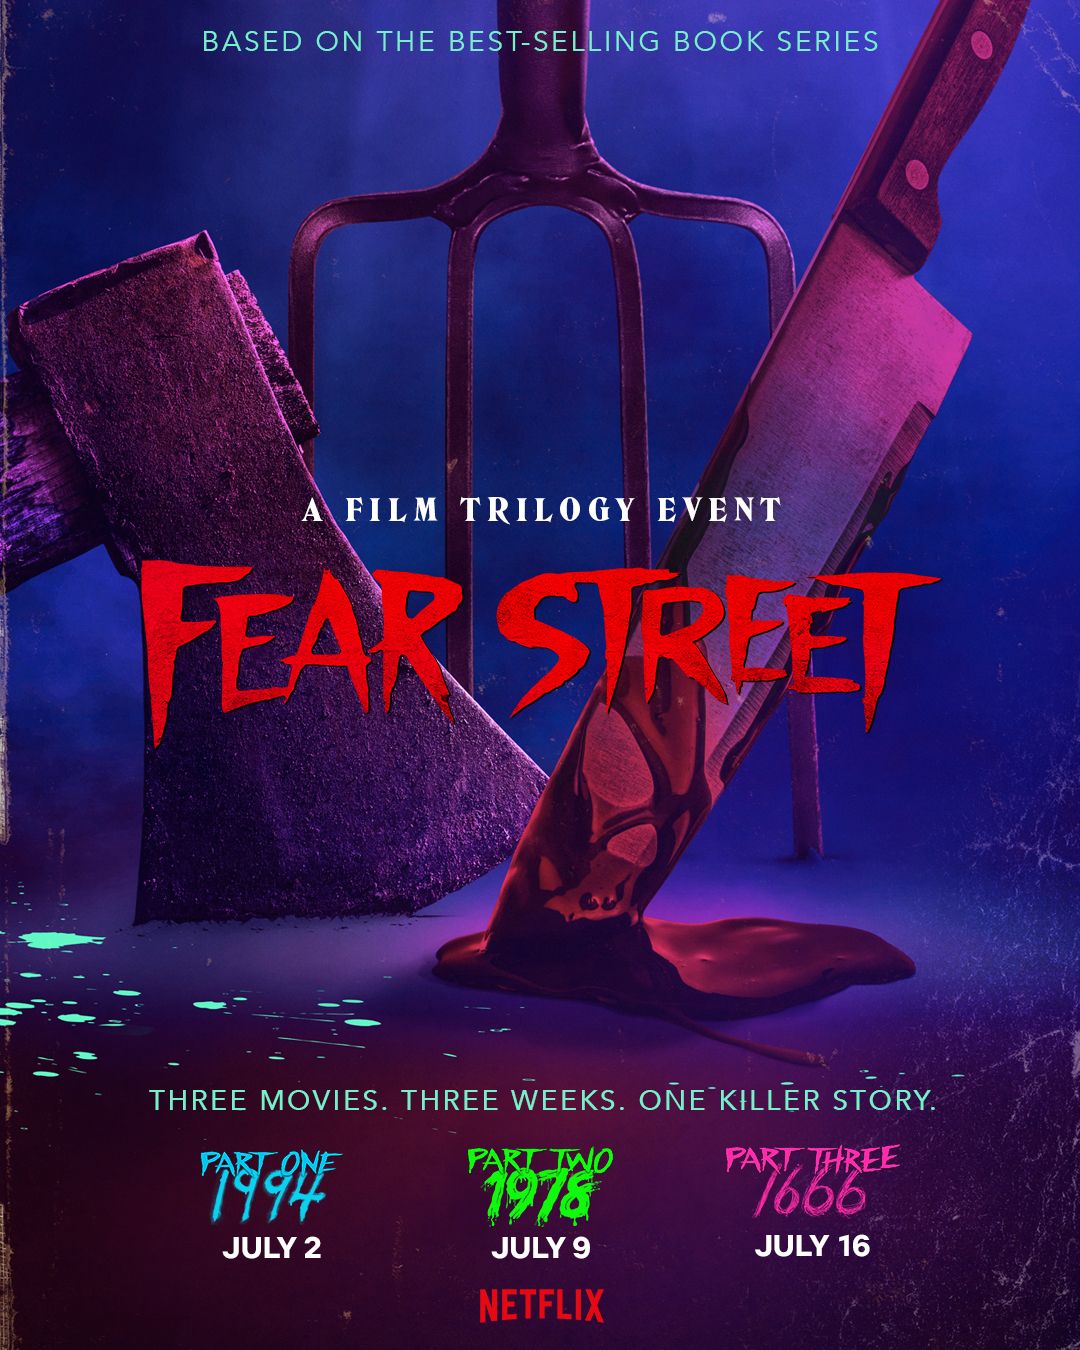 Fear street part 2